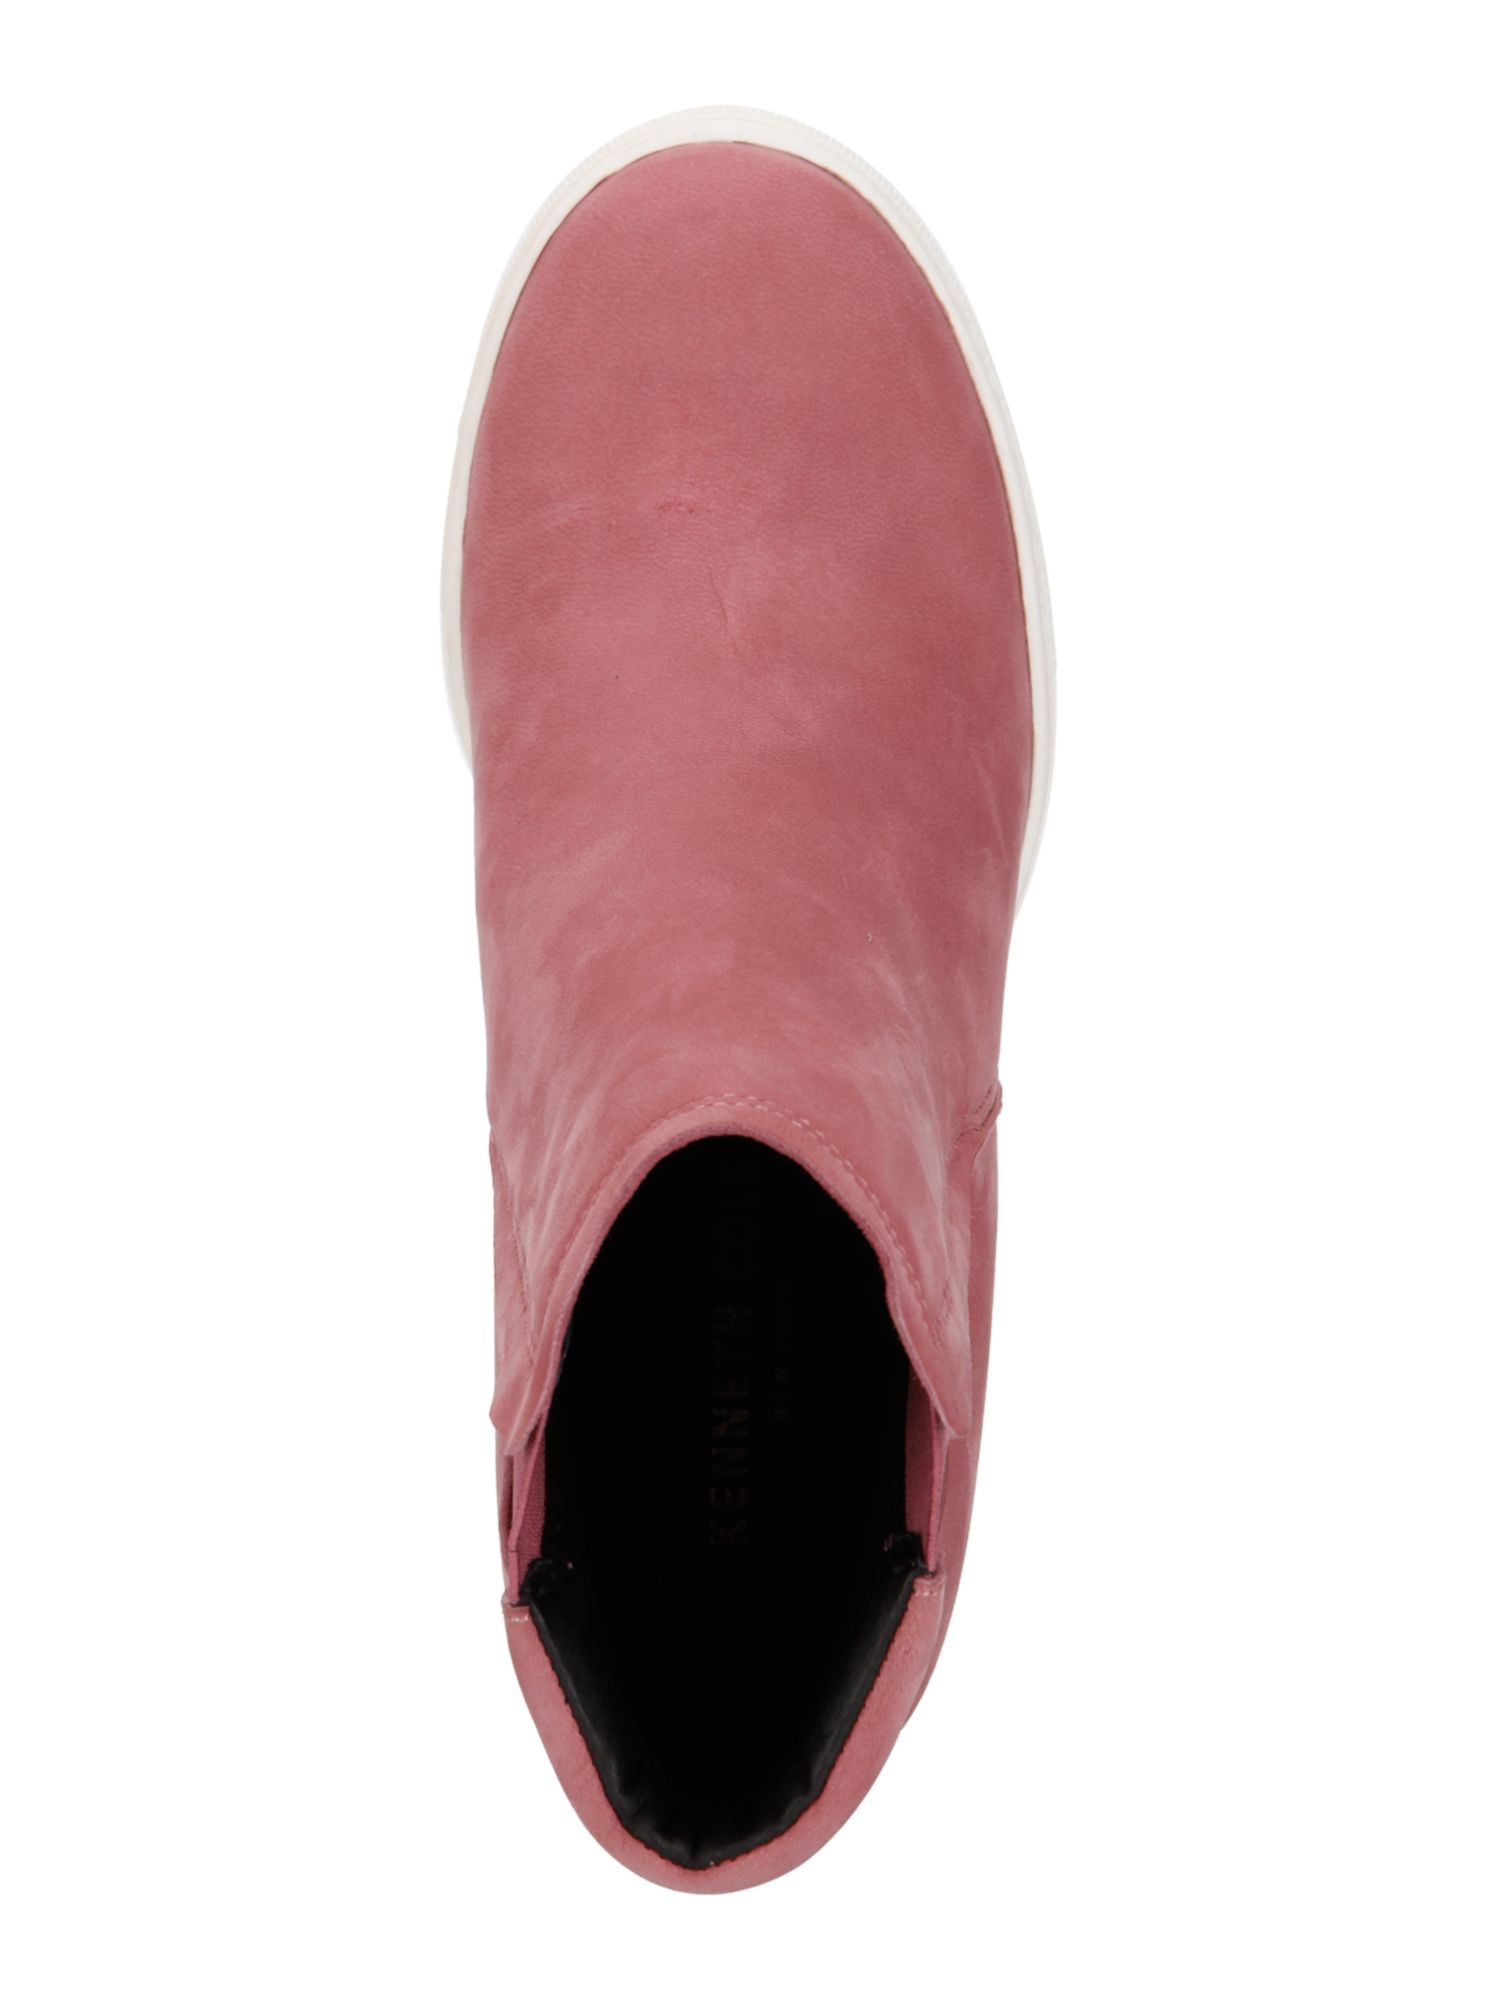 Jeanne Pink Wedges  Pink wedges, Wedges, Designer heels